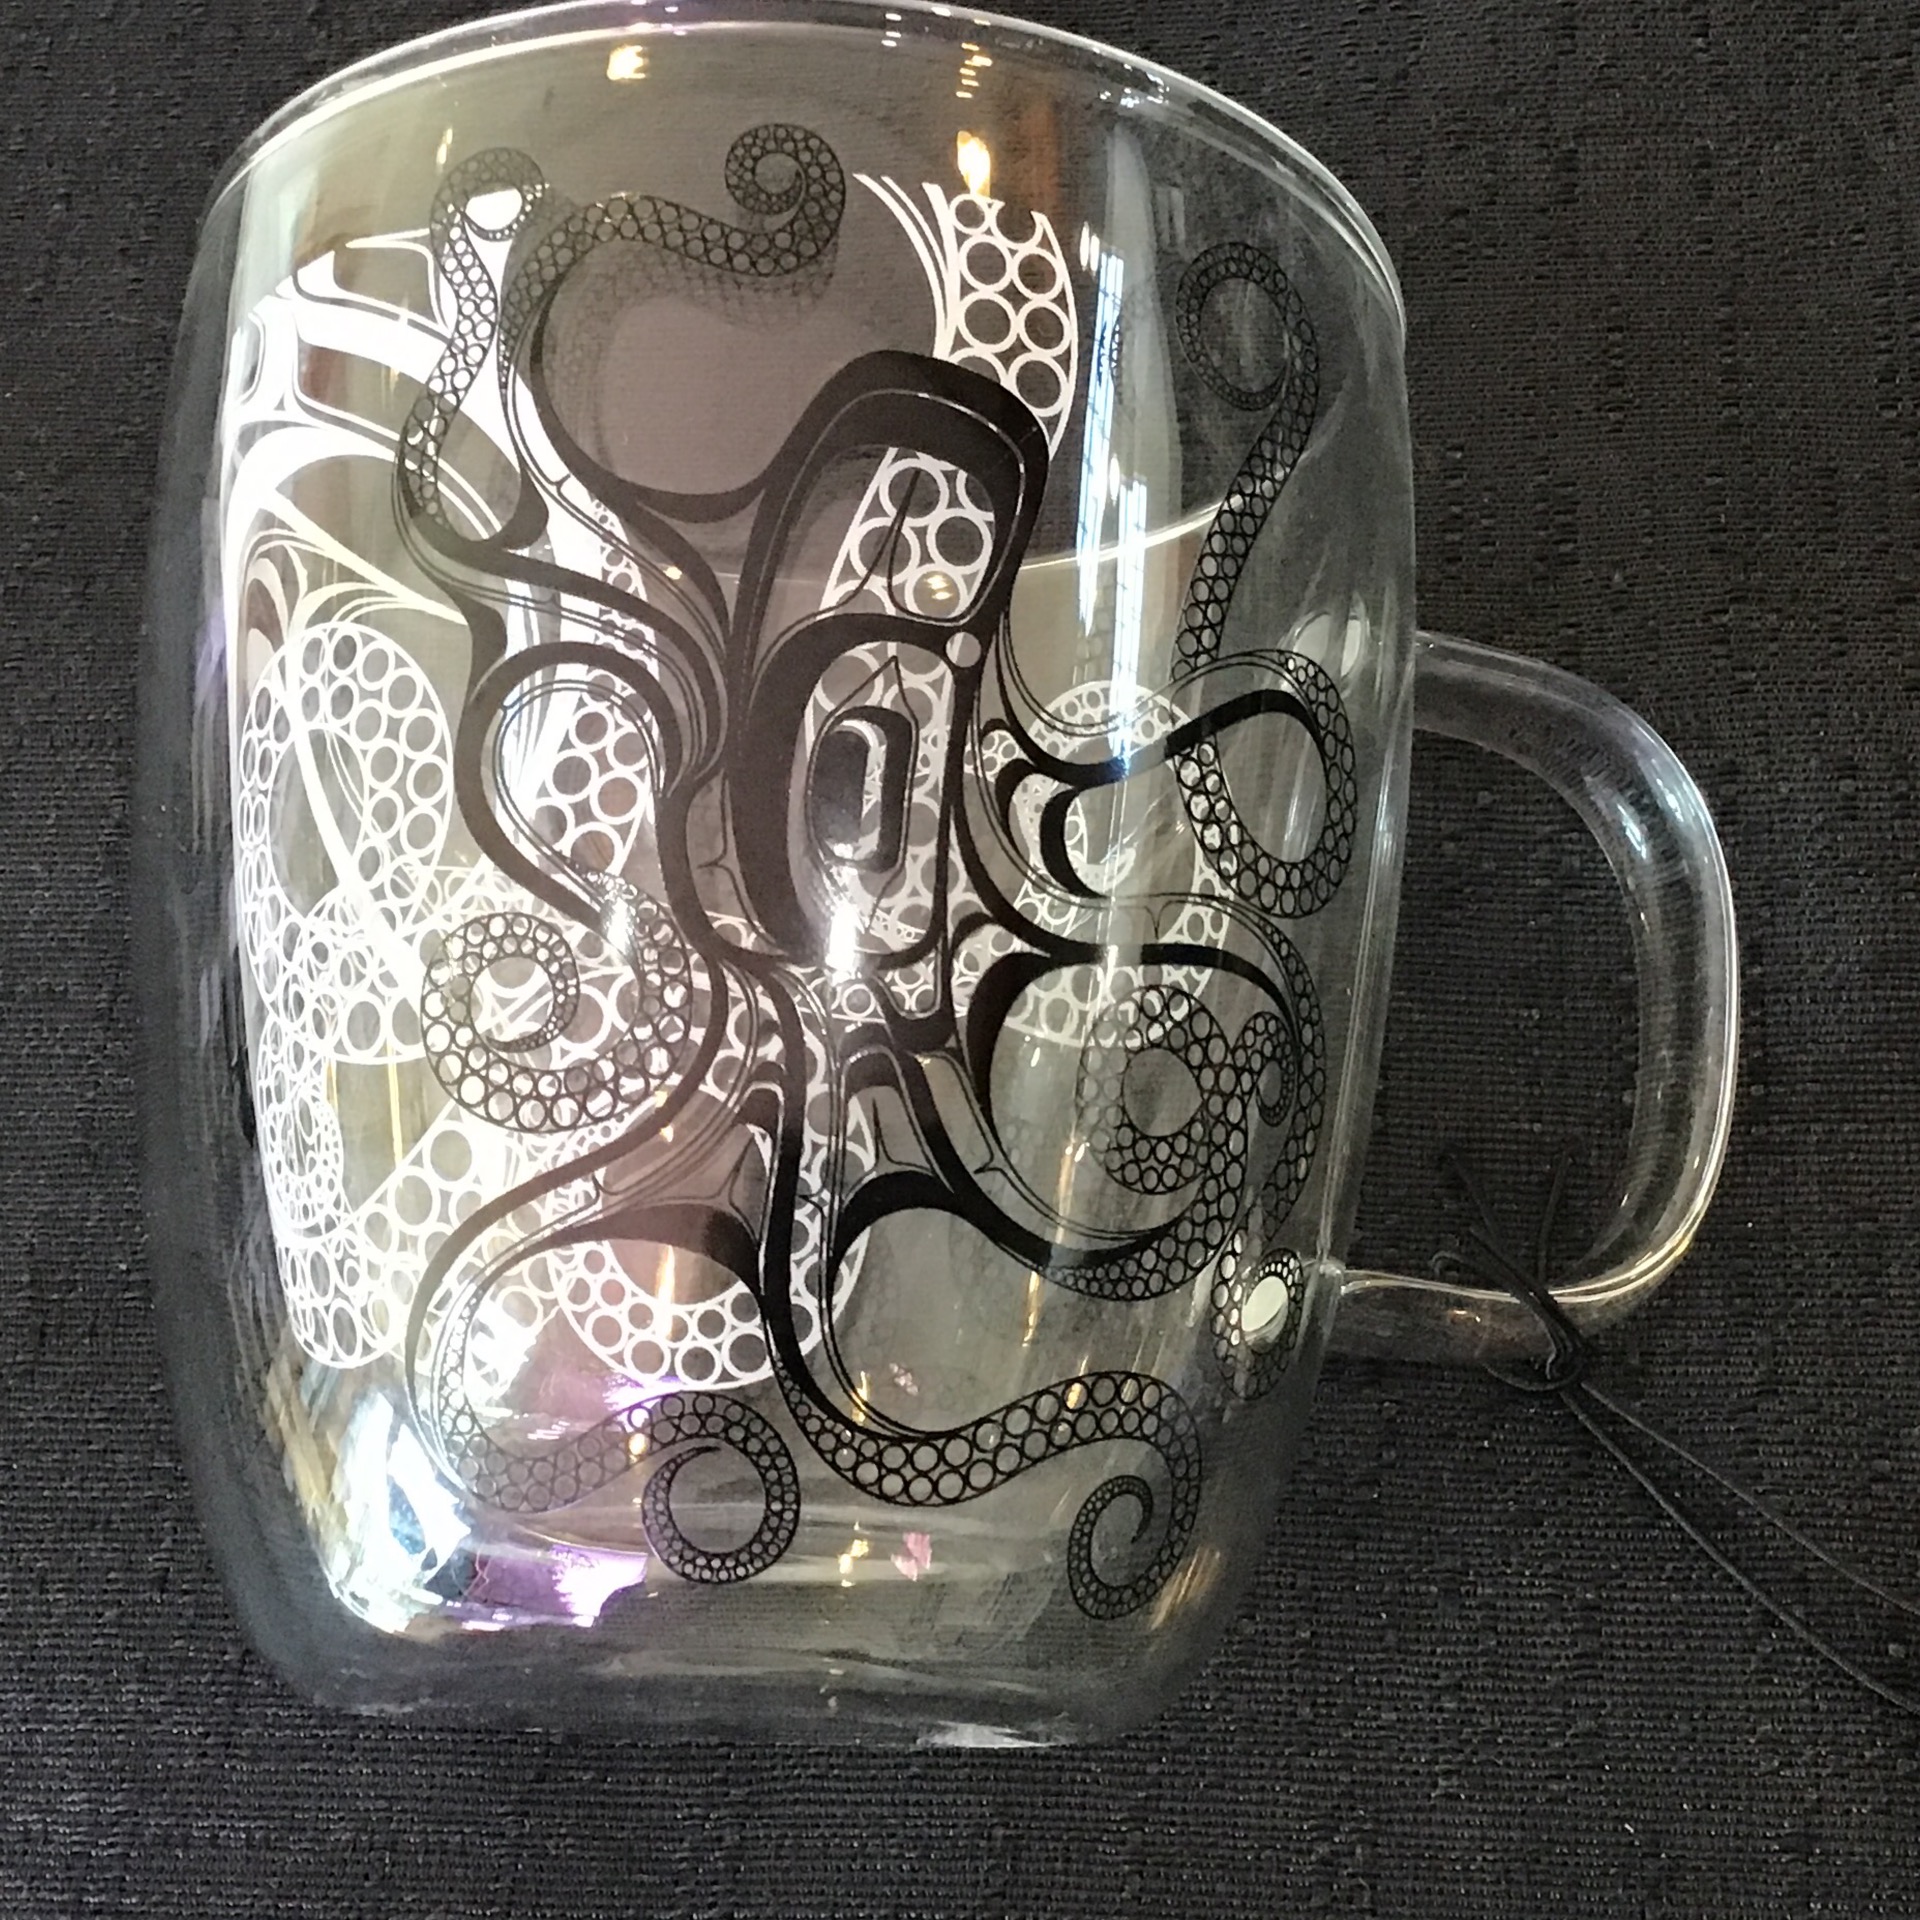 Octopus Mug (12 oz double walled glass mug)